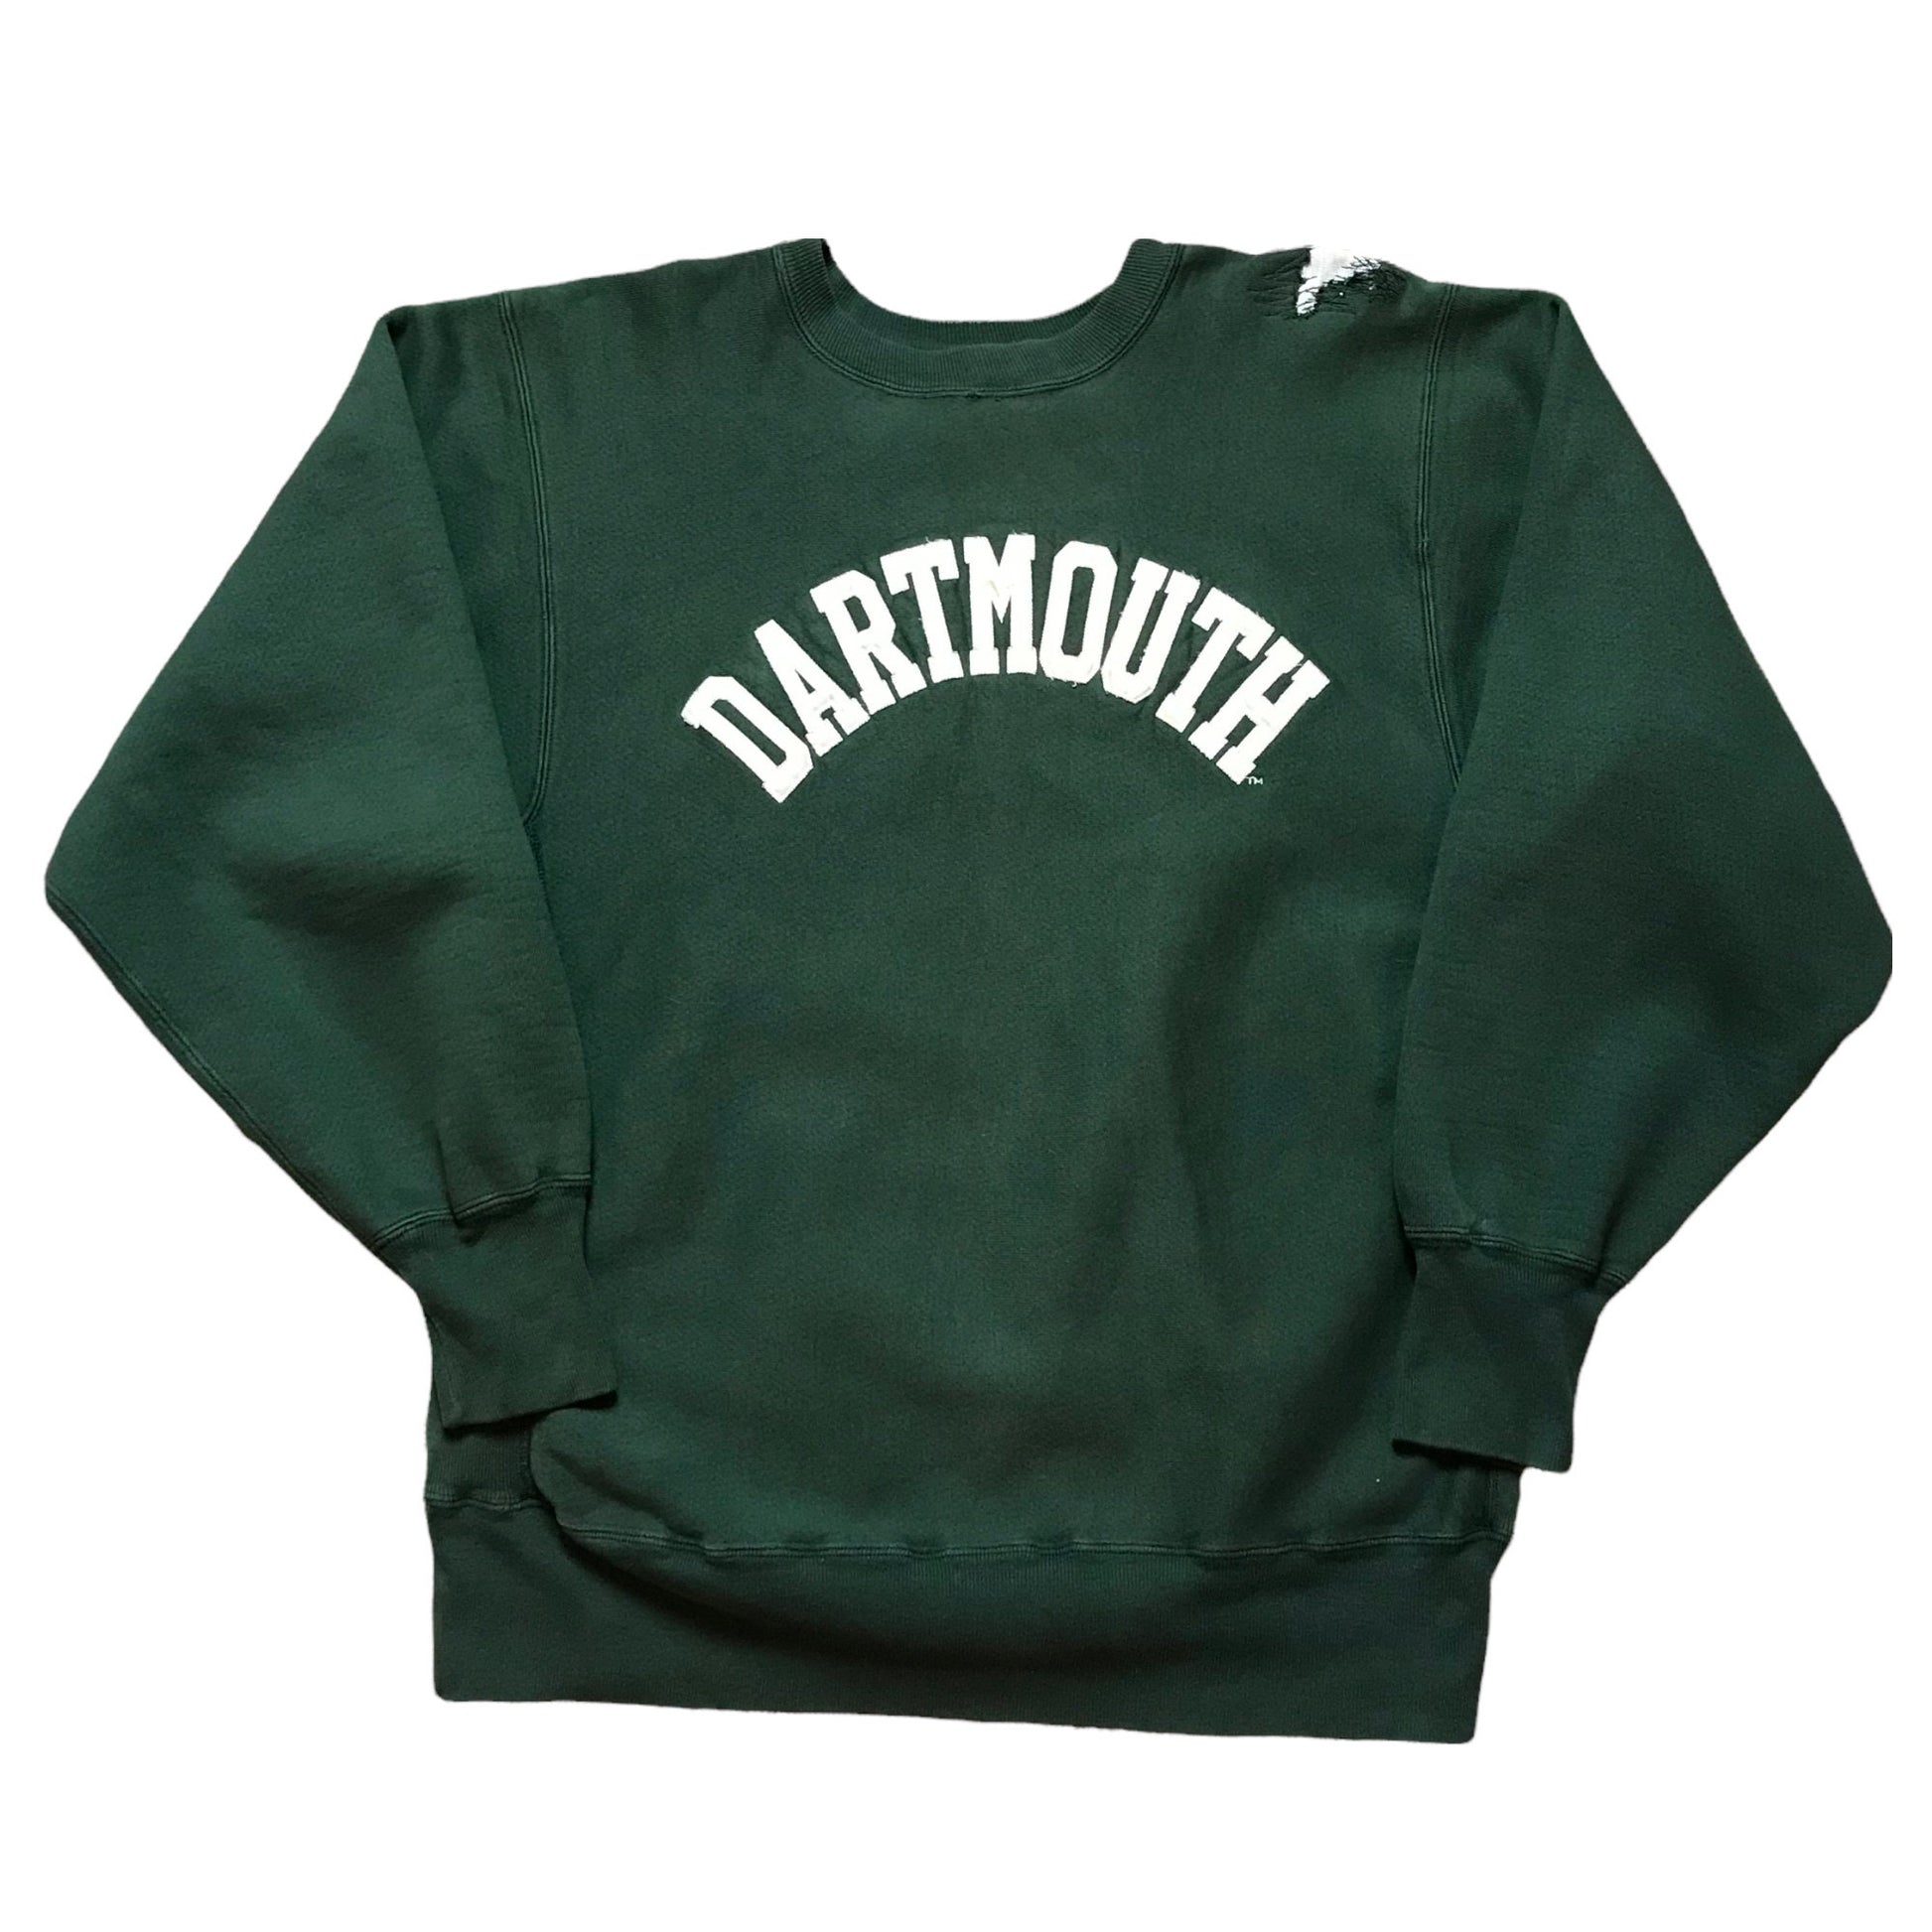 1990s Repaired Dartmouth University Champion Reverse Weave Sweatshirt Size L/XL